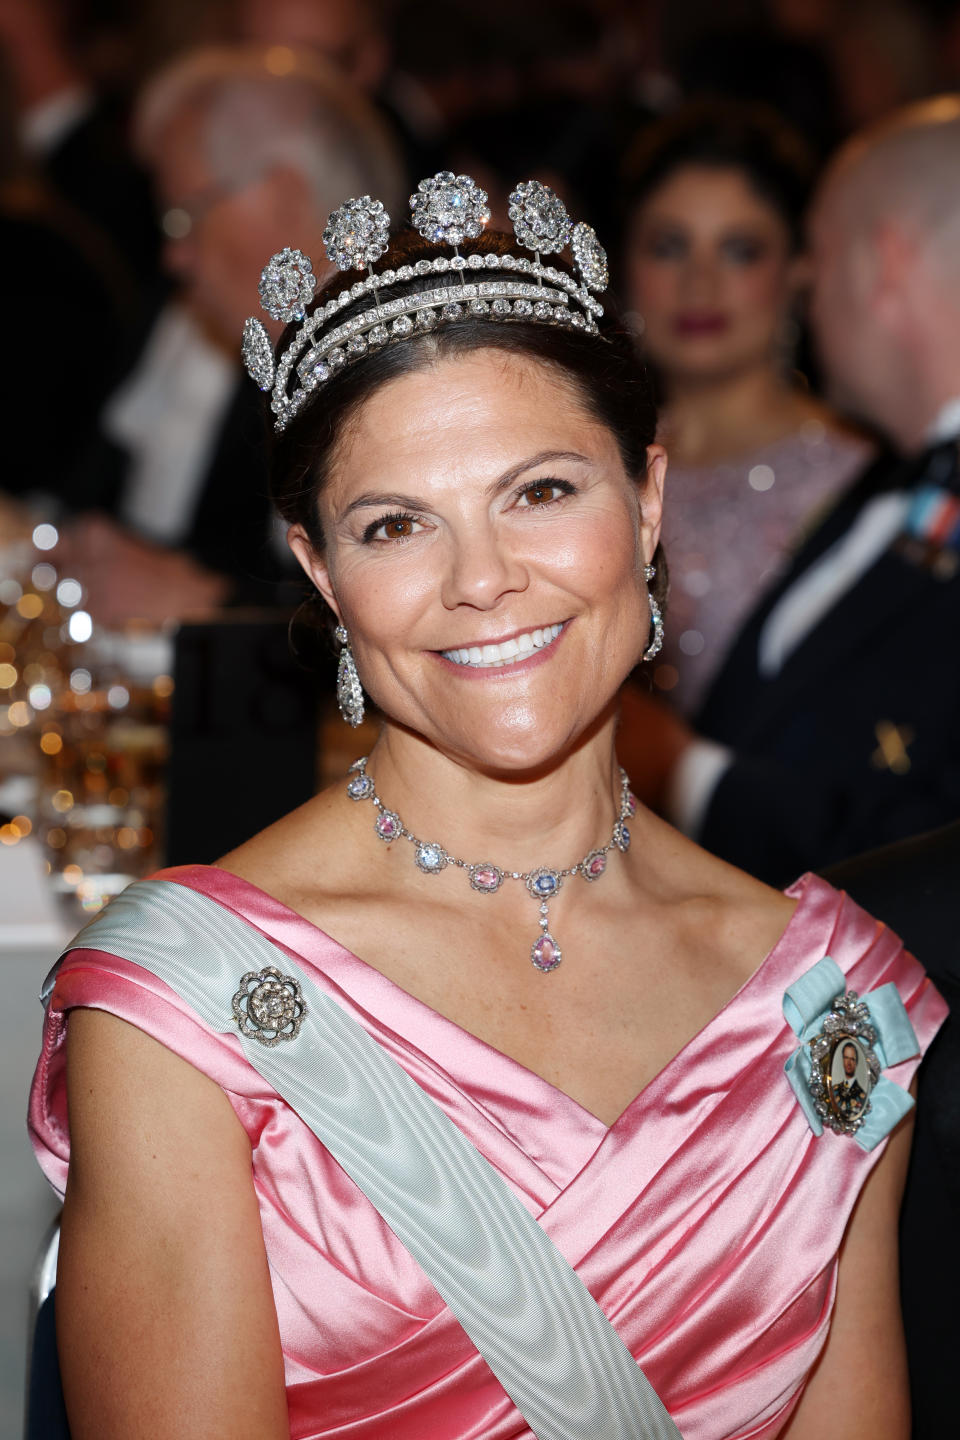 Princesa Victoria de Suecia (Photo by Pascal Le Segretain/Getty Images)